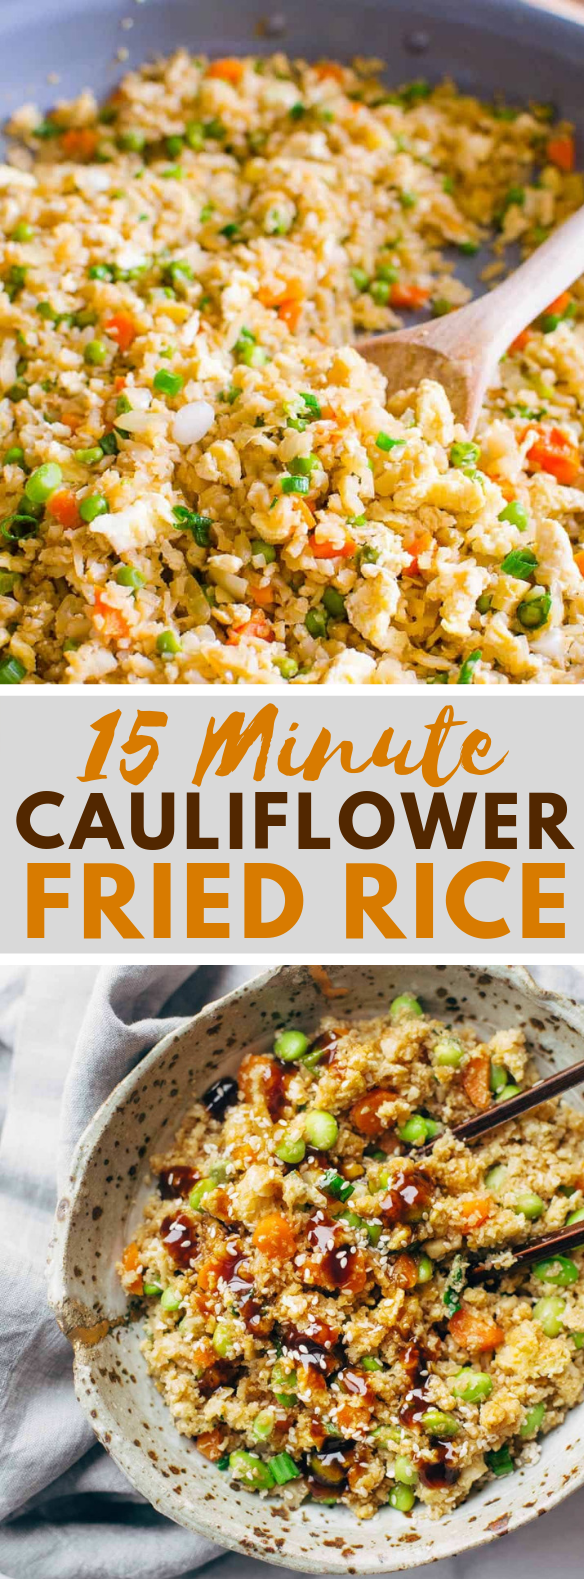 15 Minute Cauliflower Fried Rice #vegetarian #glutenfree